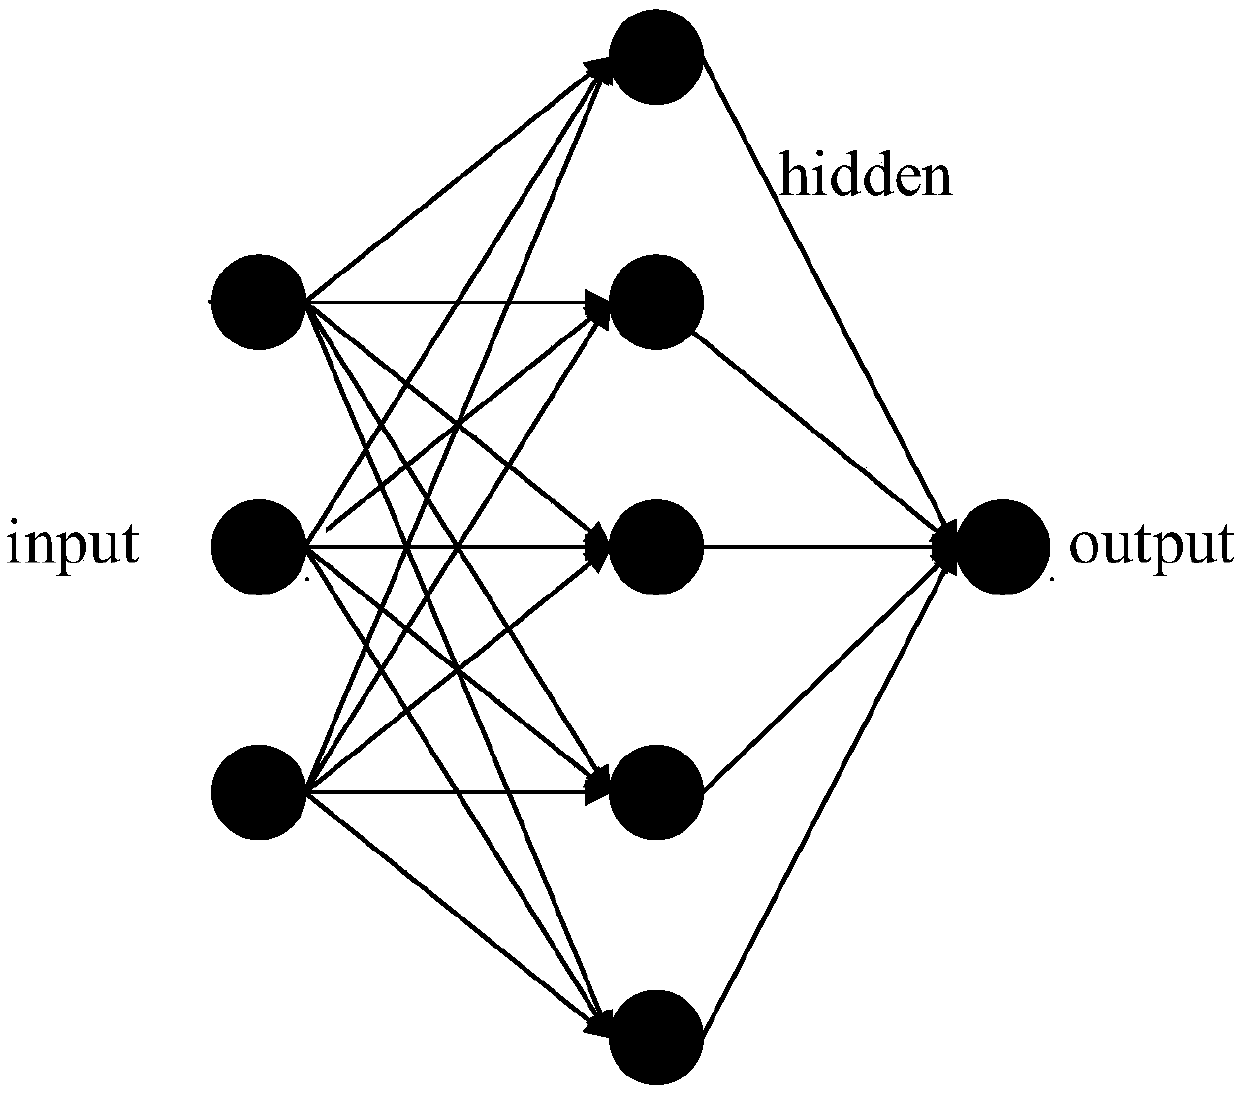 A PSO-BFGS neural network training algorithm